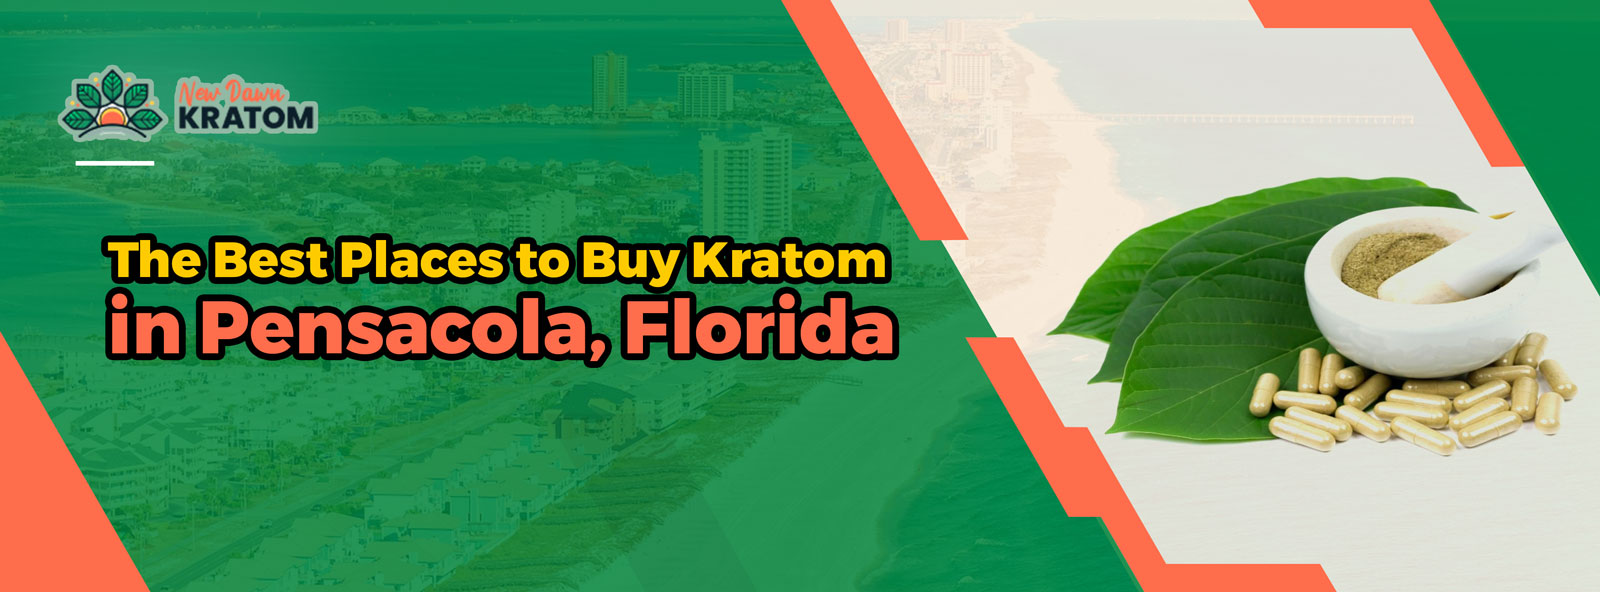 Top-Five-Best-Places-to-Buy-Kratom-in-Pensacola-Florida